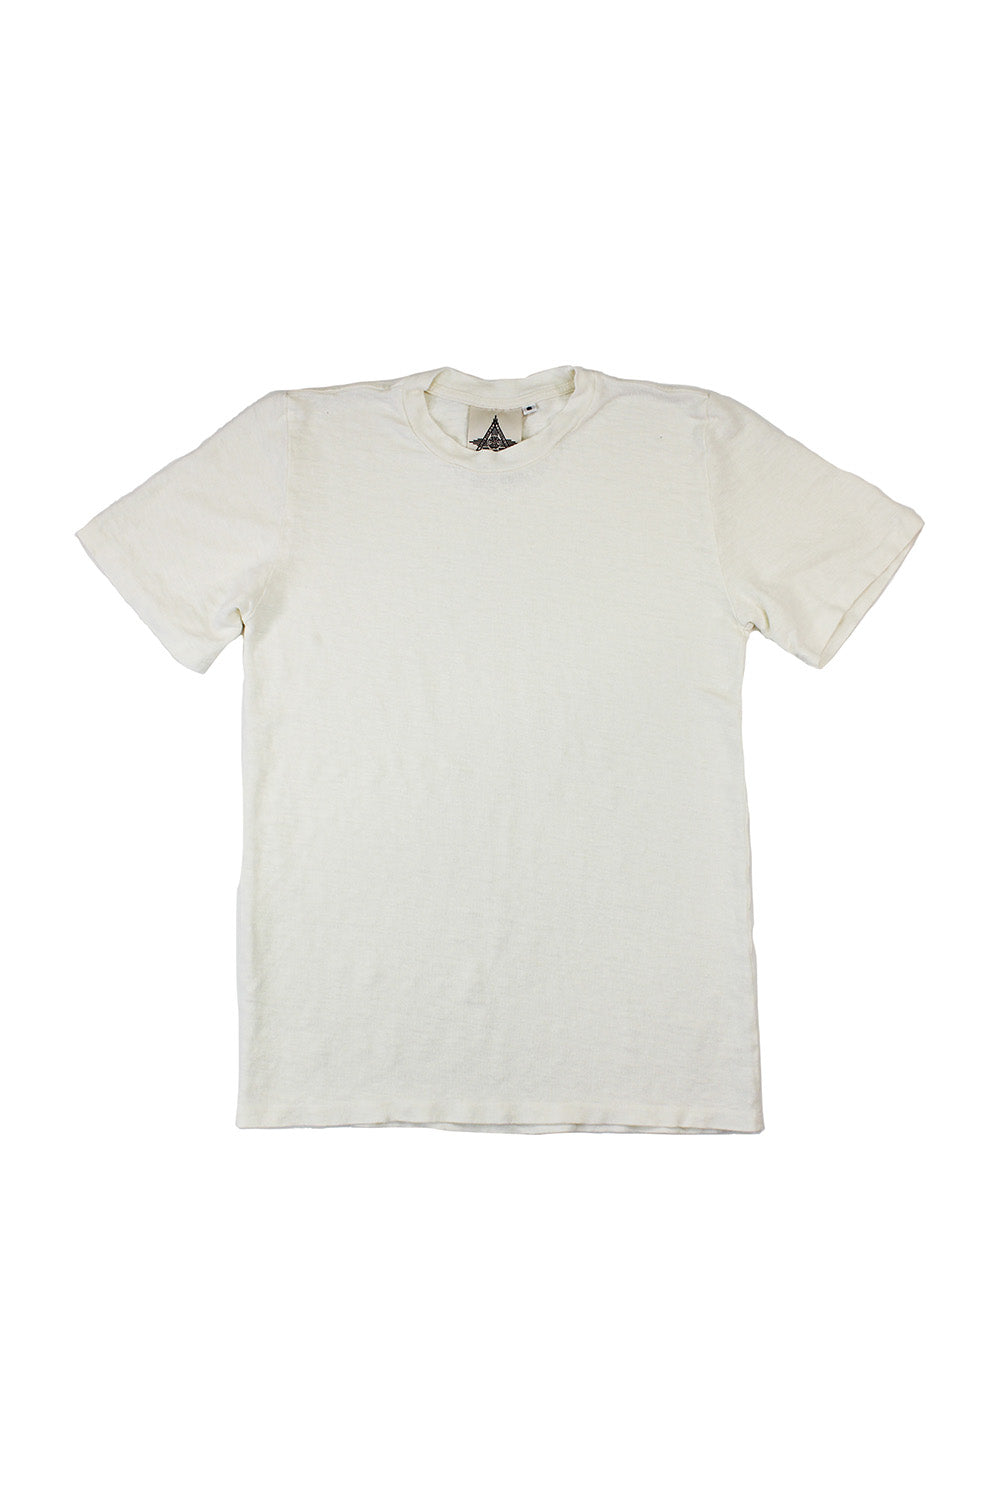 Mana 10 - 100% Hemp Tee | Jungmaven Hemp Clothing & Accessories / Color: Washed White